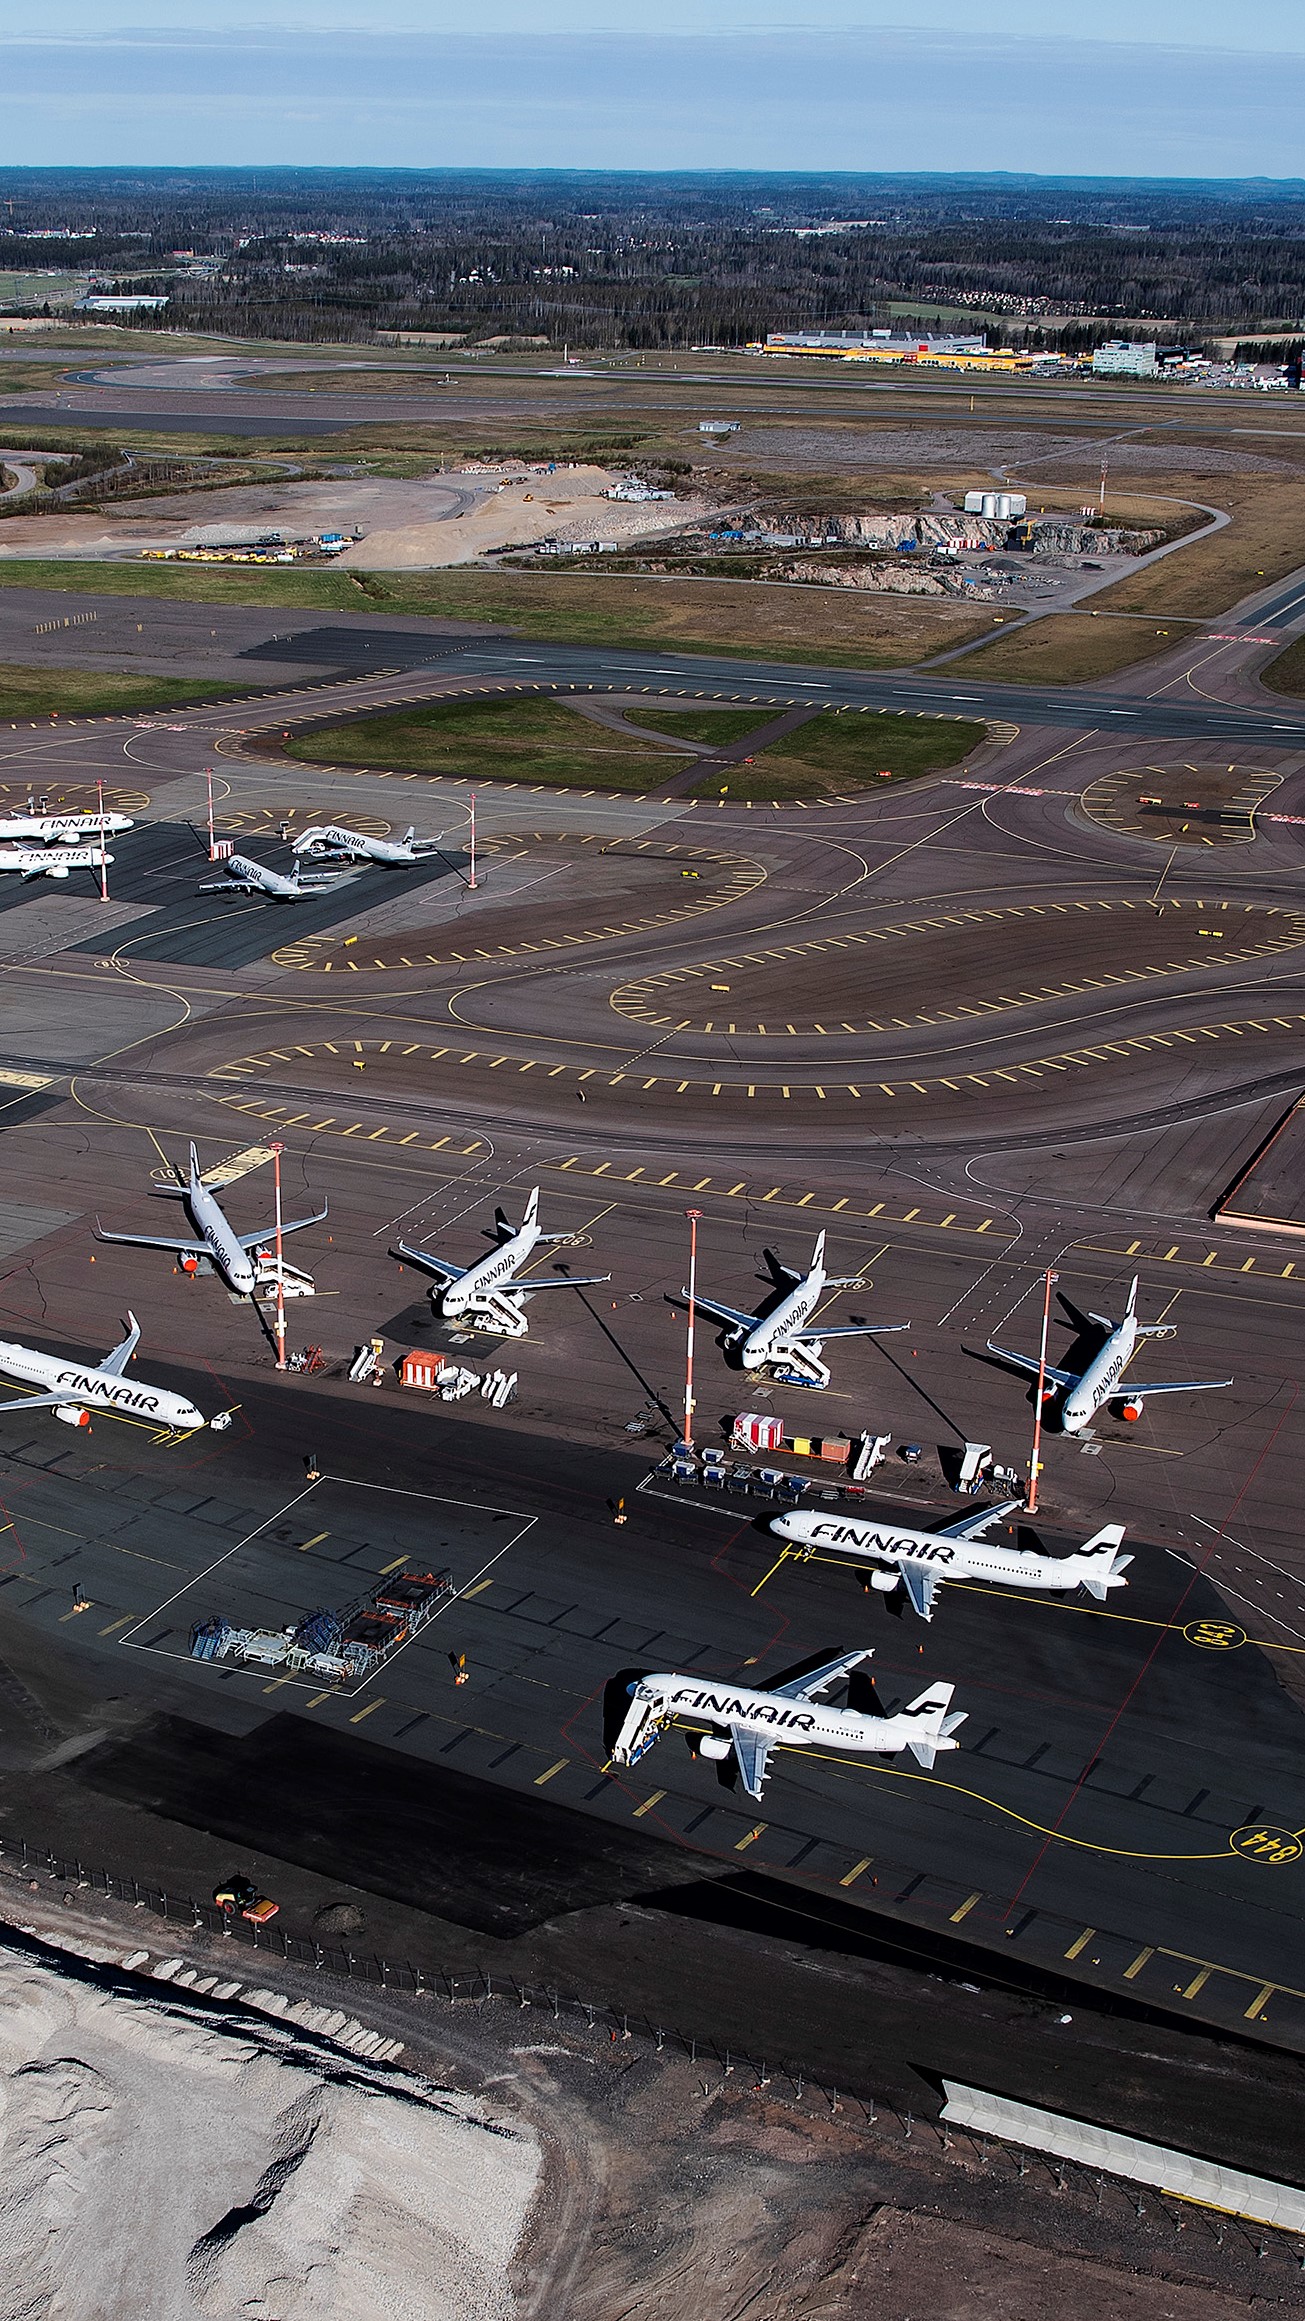 10k A job related to Helsinki-Vantaa Airport is in danger, the mayor warns